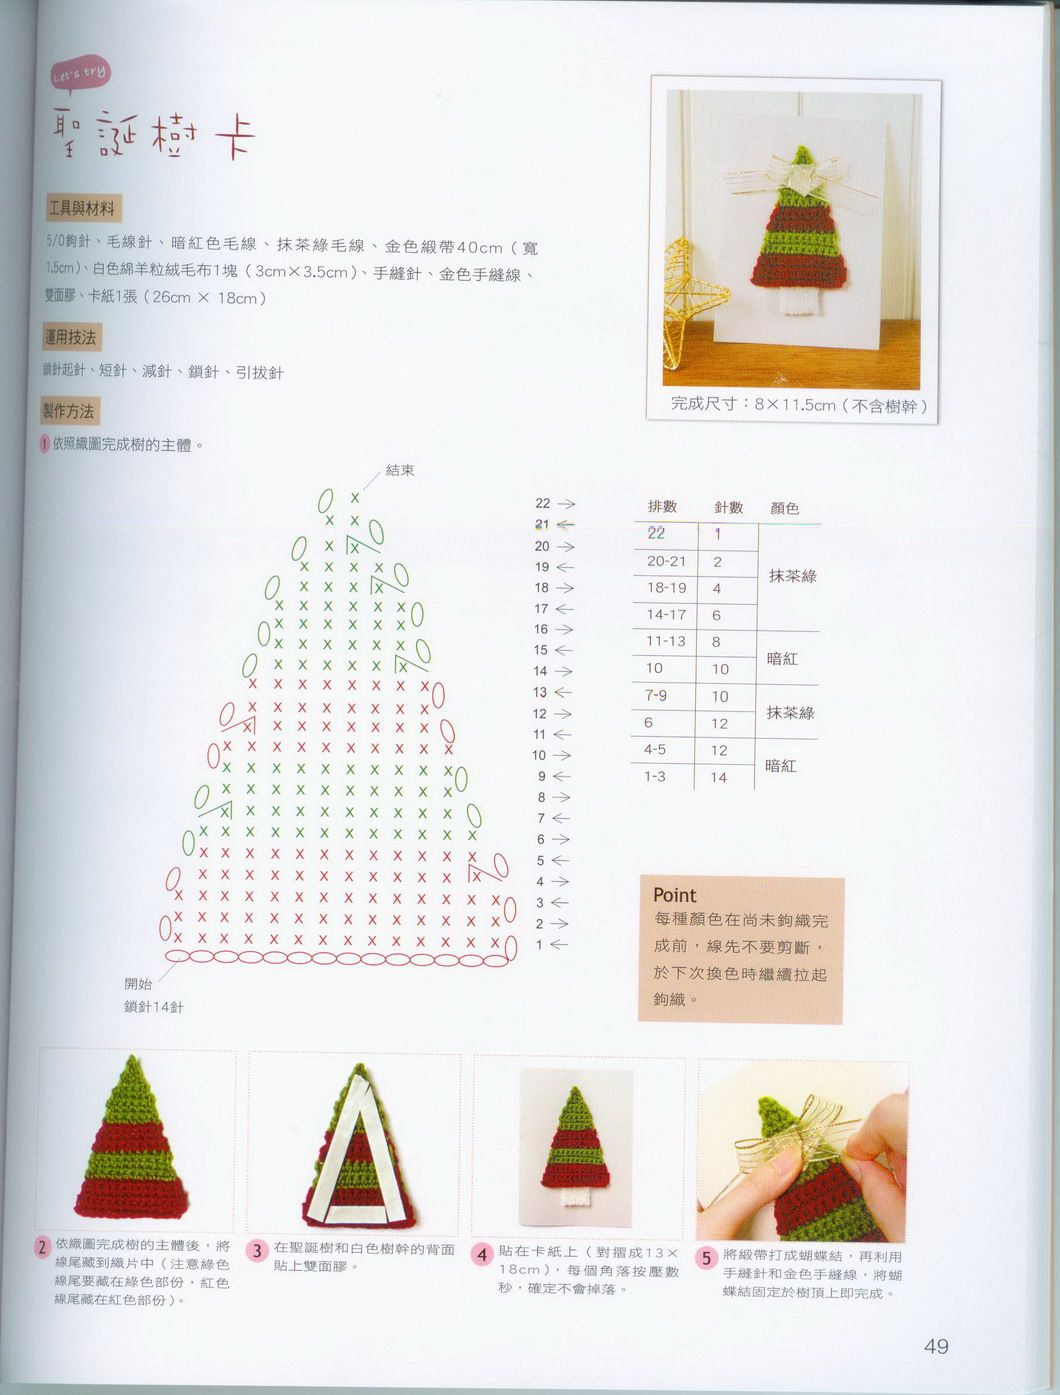 Garland christmas tree amigurumi pattern 1 (5)